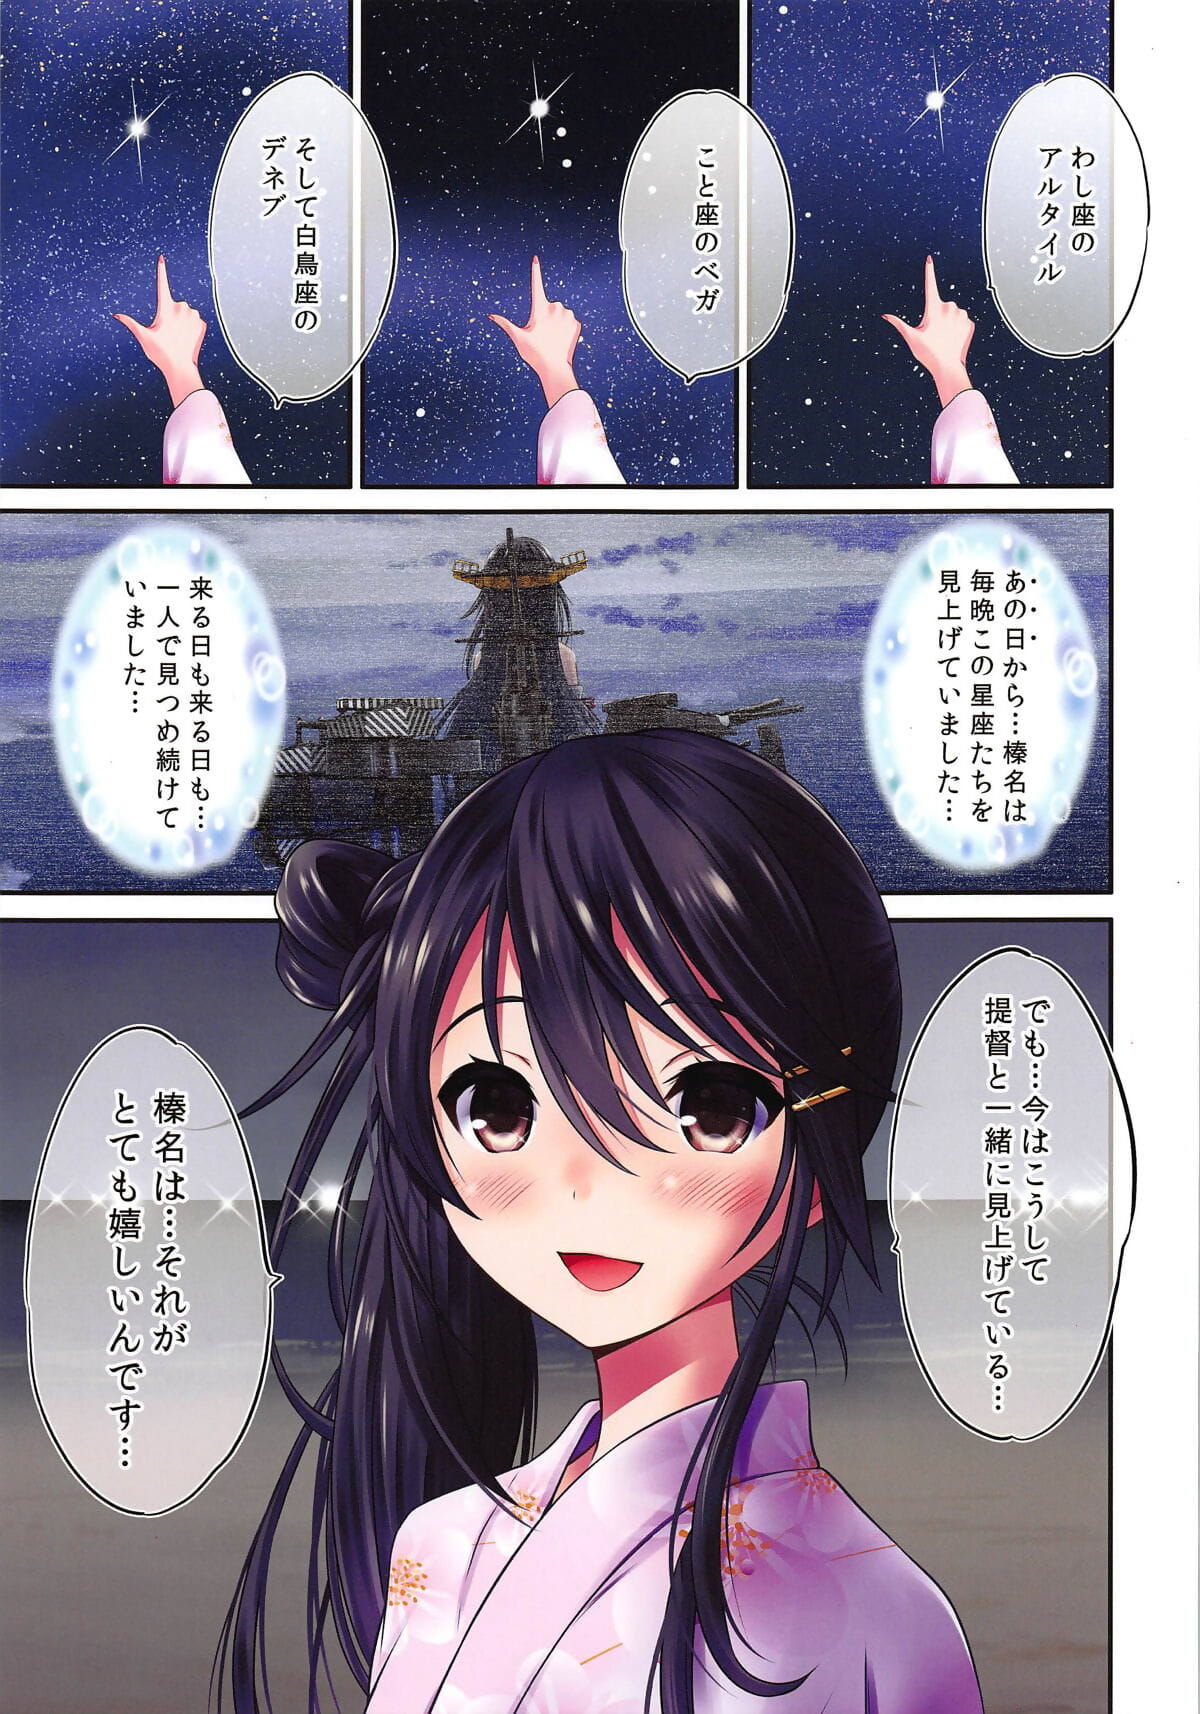 Haruna Ada page 1